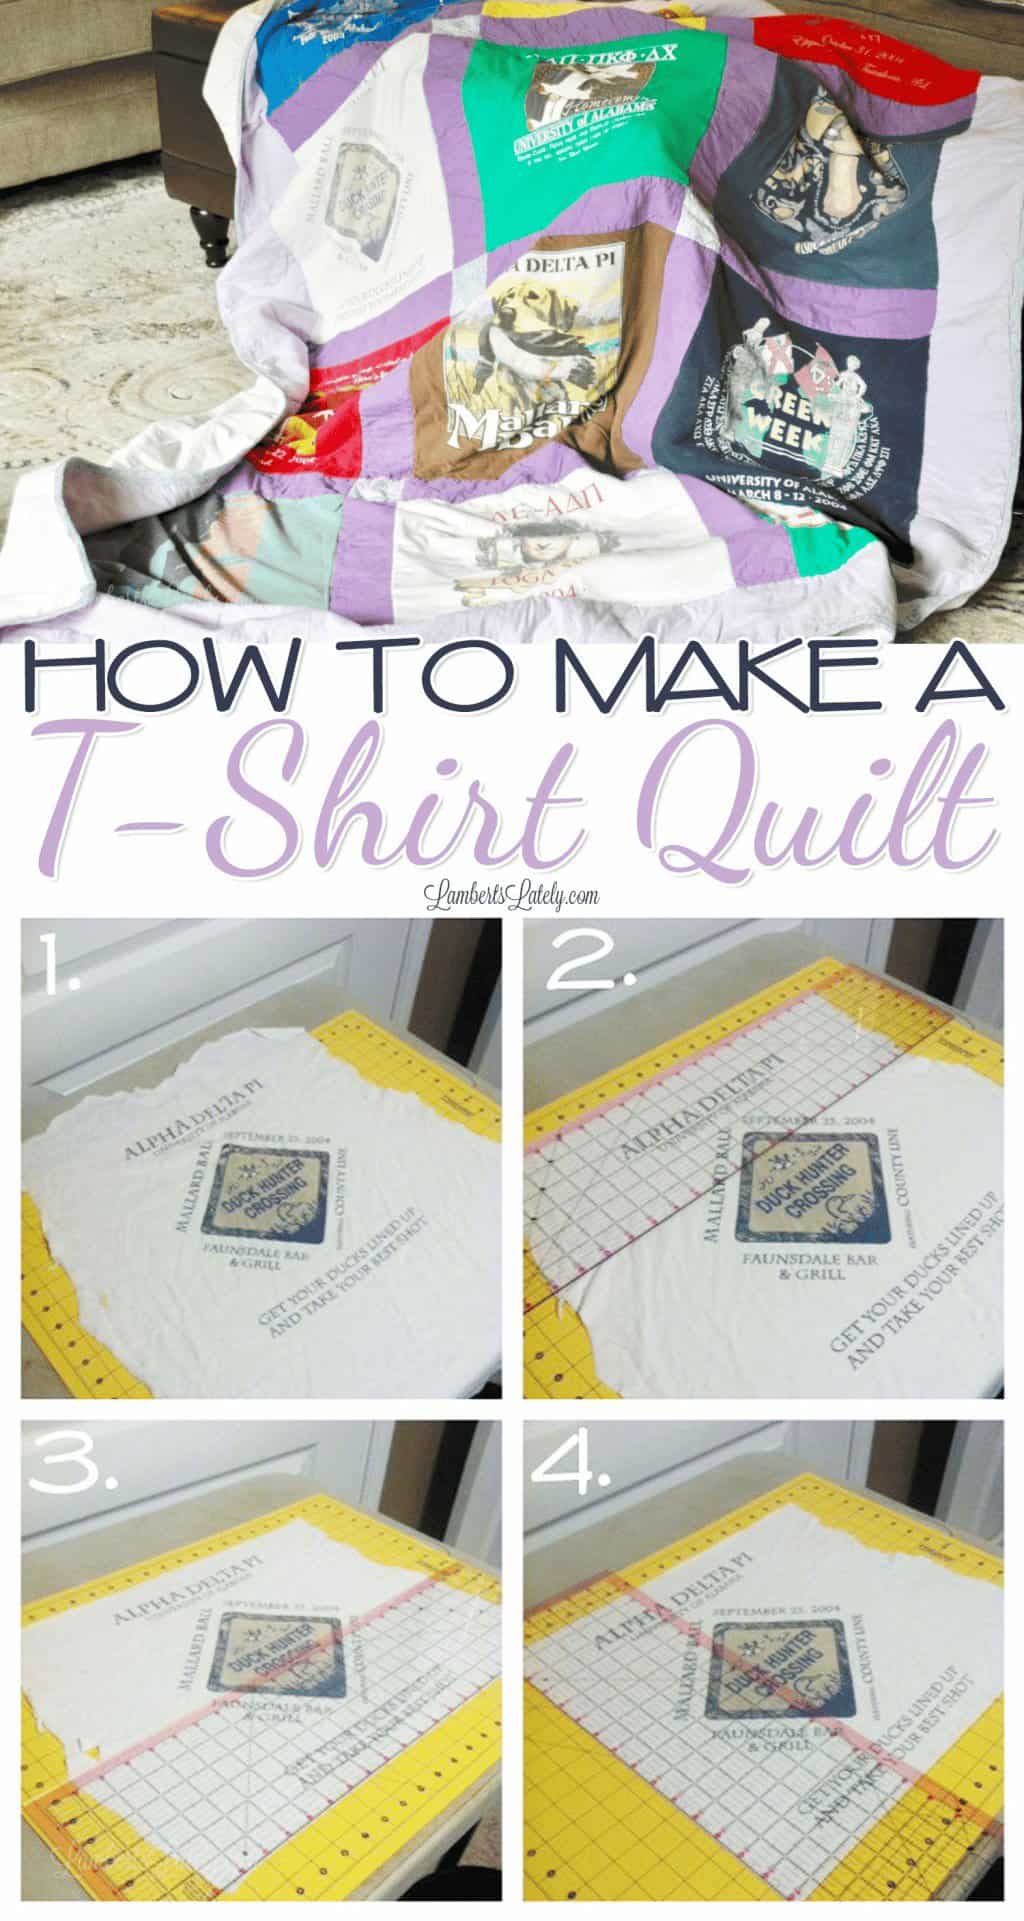 how to make a t-shirt quilt.